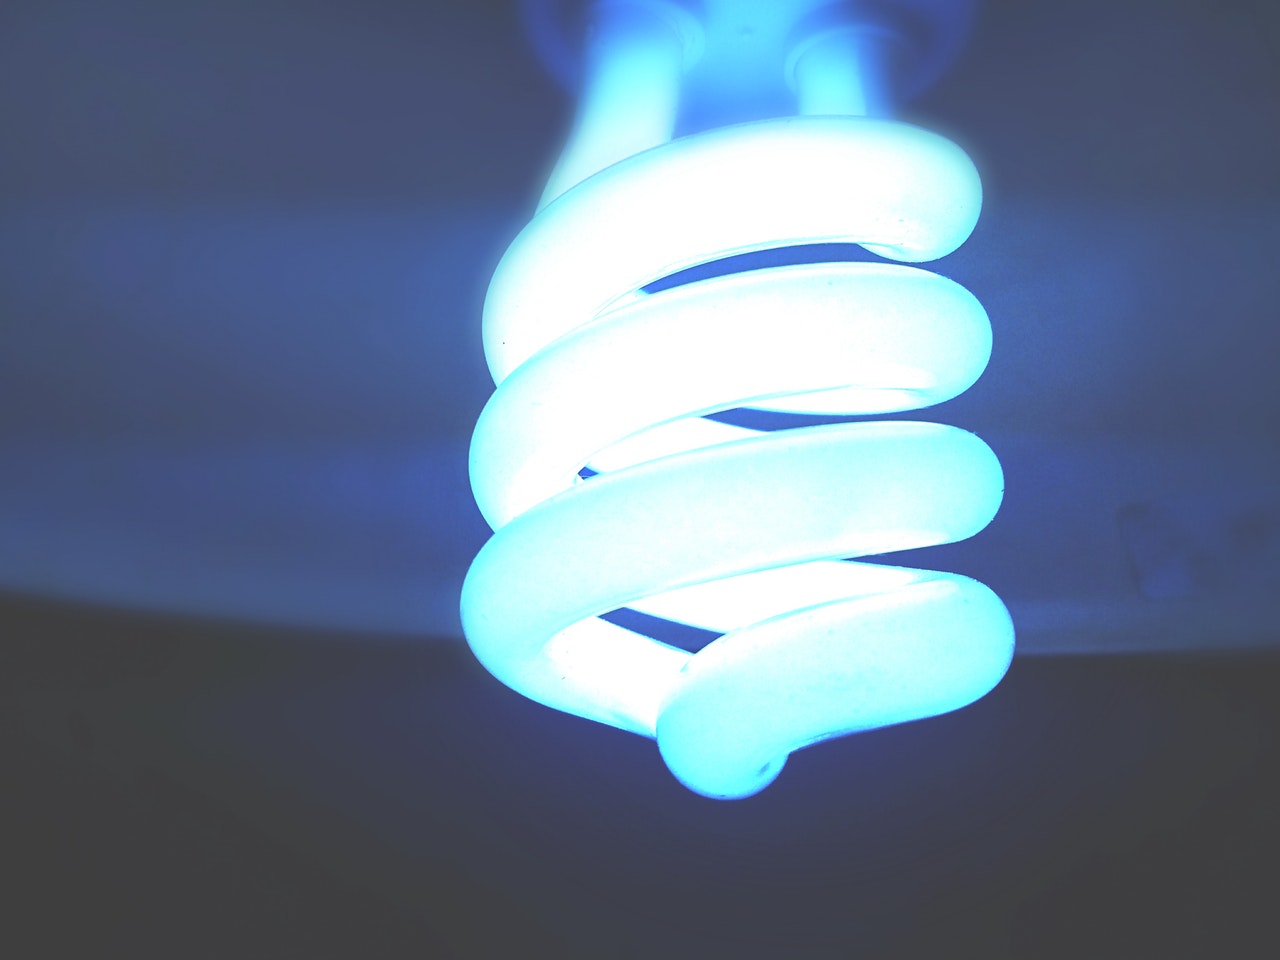 5G Emitting LED Lights Linked With Cancer And Fatal Health Risks